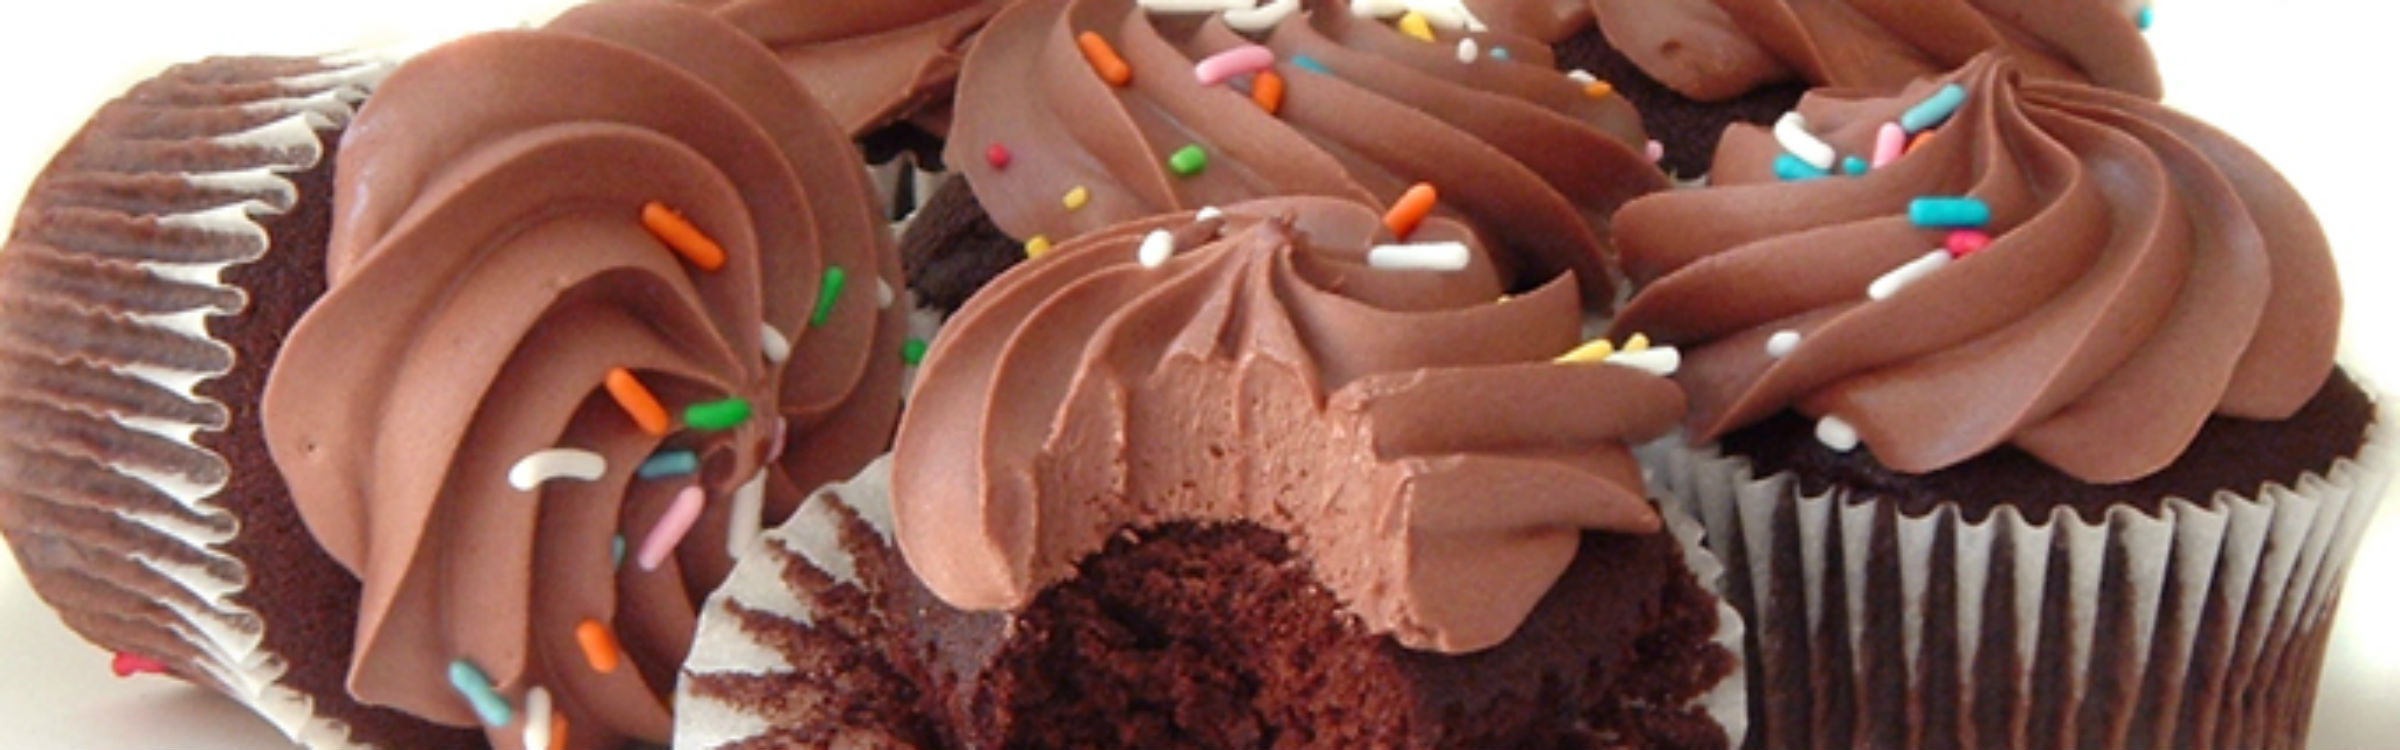 Chocolate cupcakes header